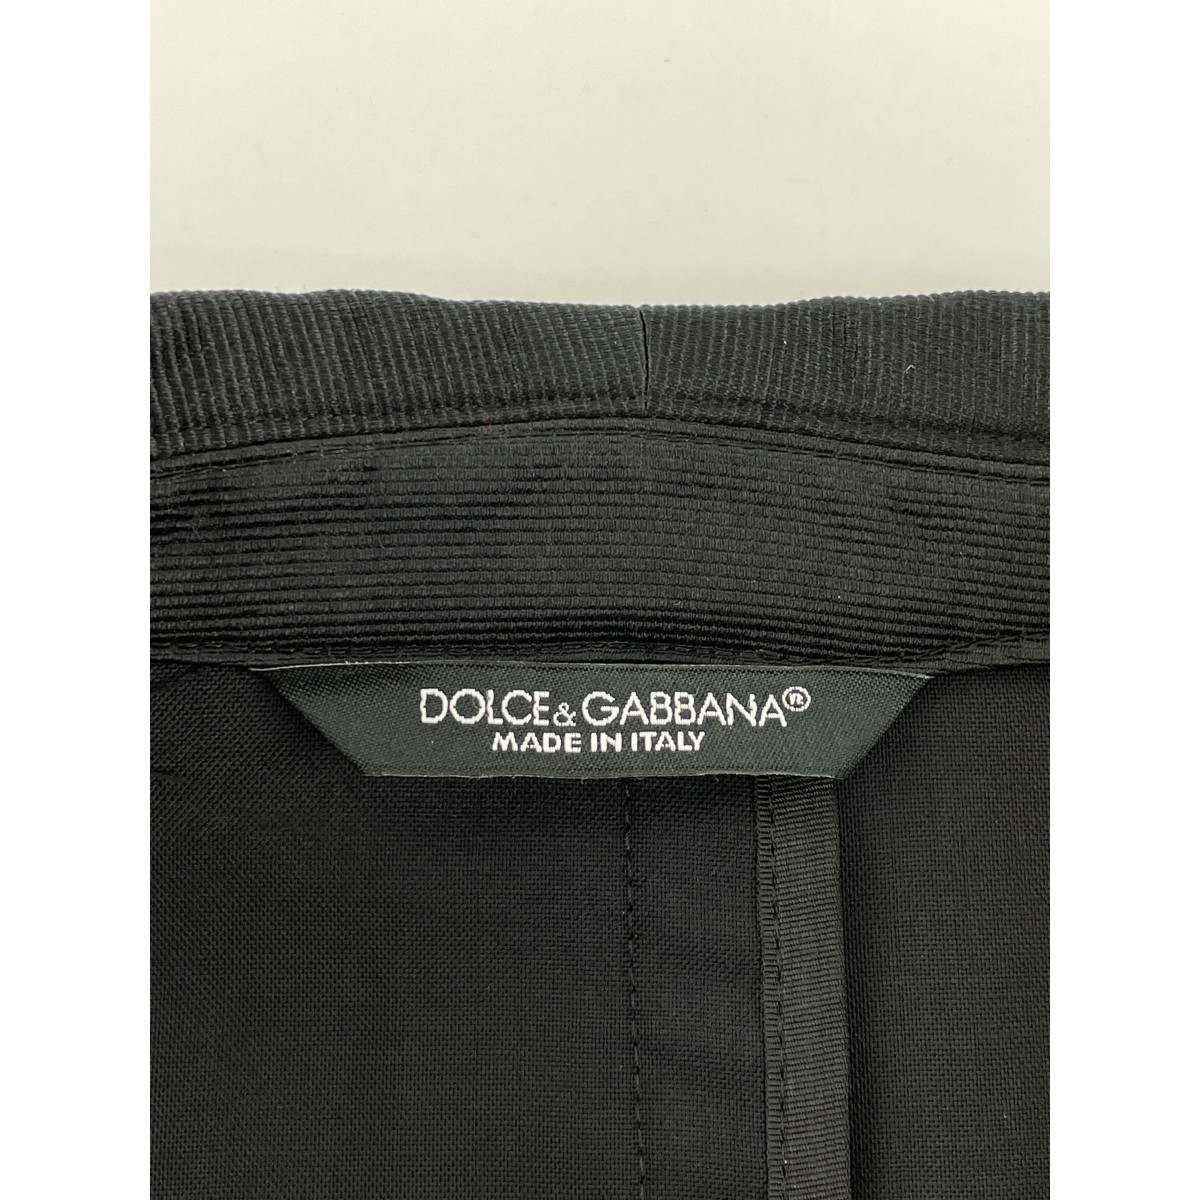 Dolce&Gabbana ドルチェアンドガッバーナ ホワイト G2KD7T 転写 ショールカラージャケット ホワイト 50 ジャケット シルク メンズ 中古_画像5